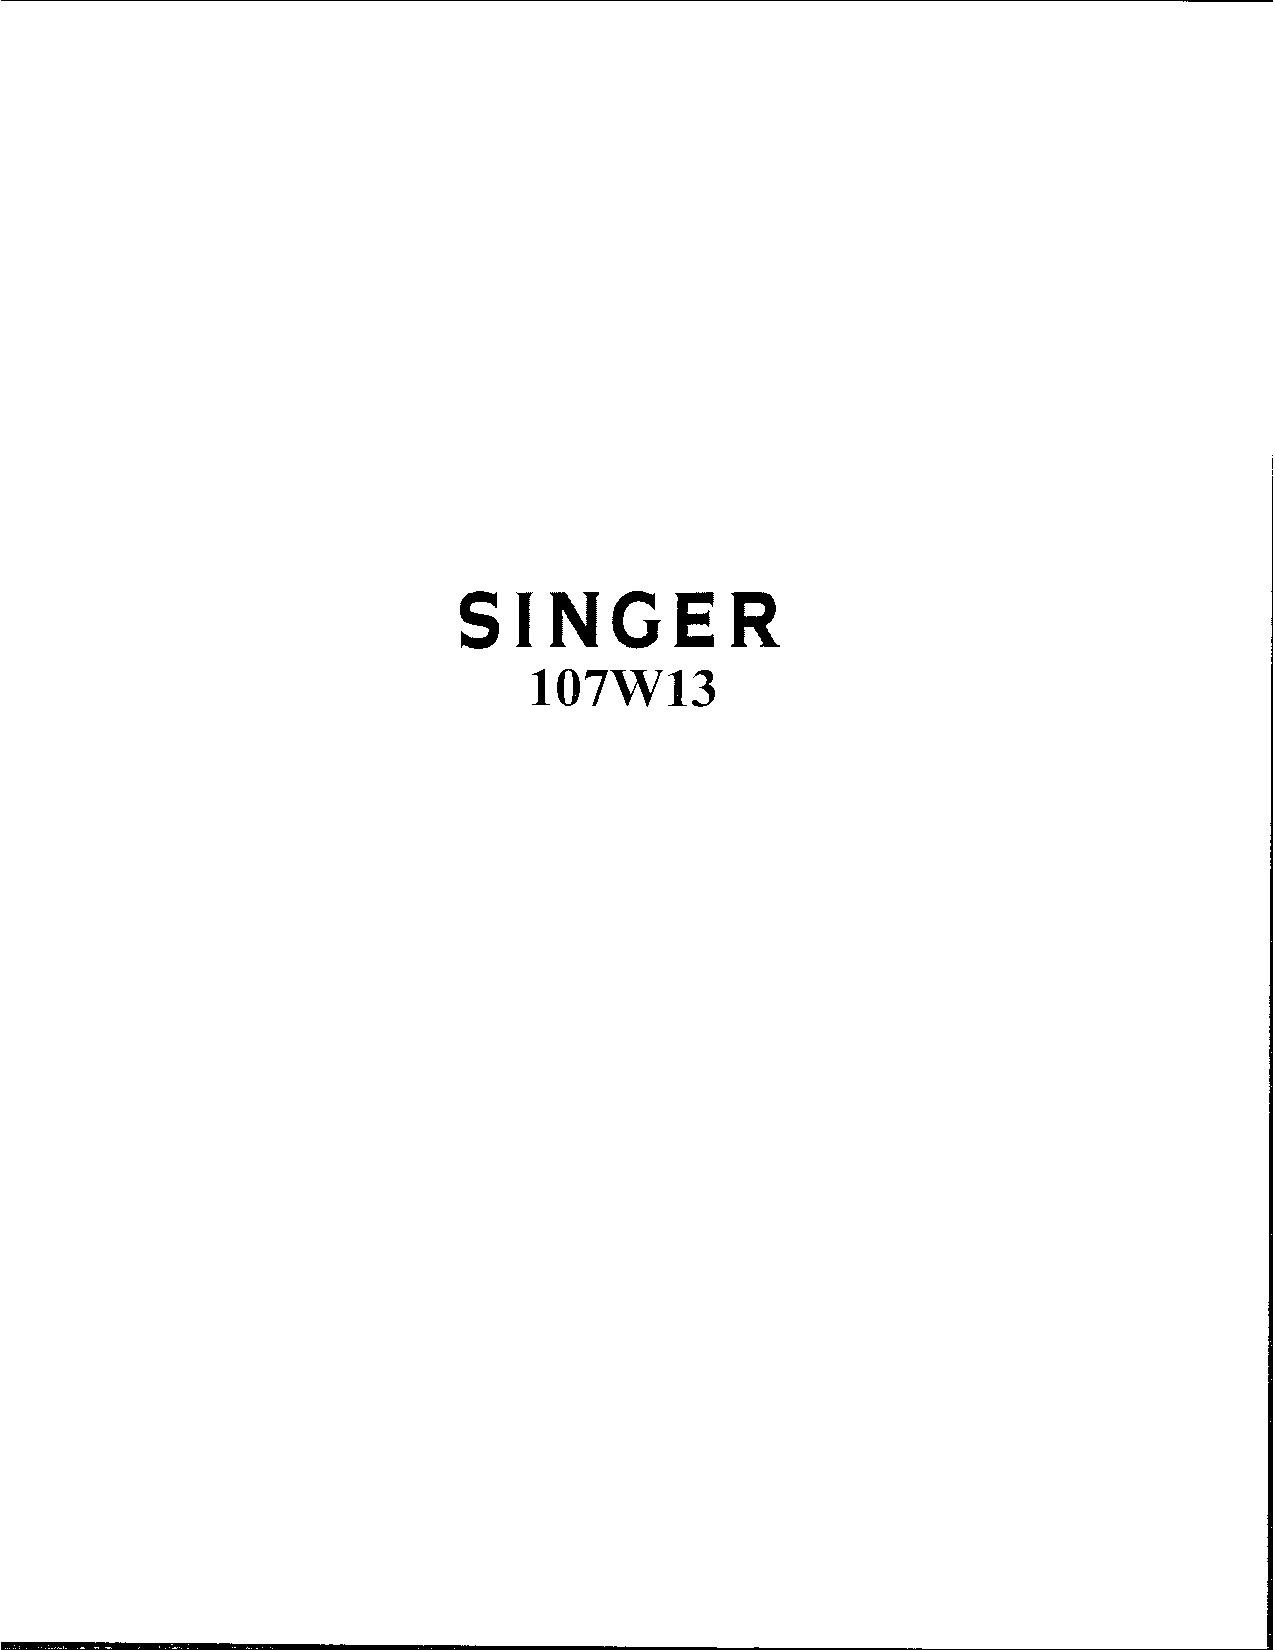 Singer 107W13 User Manual